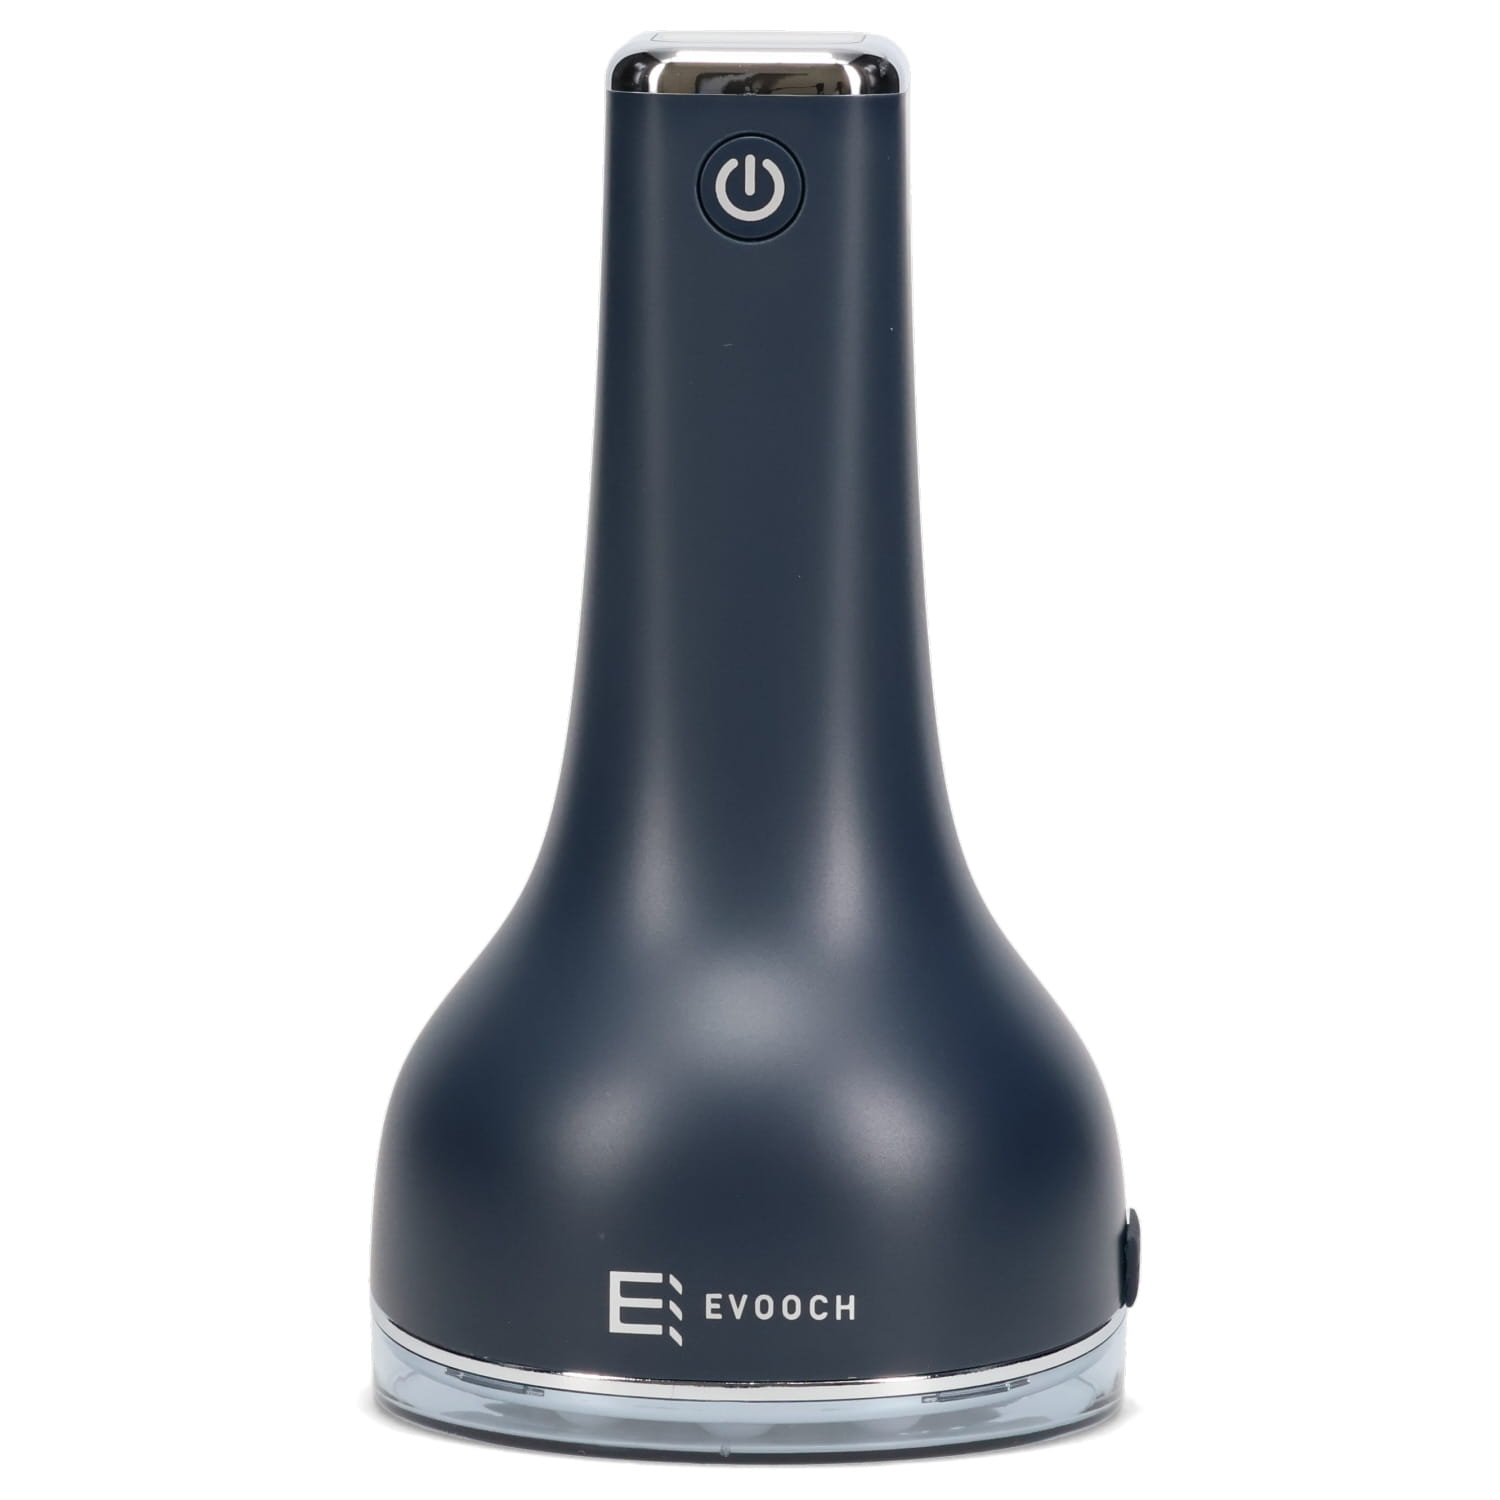 EVOOCH エボーク コンパクトボディリフト EMS 腹筋 LED 温感 振動 防水 IPX5 USB充電 シェイプアップ フィットネス ボディケア ネイビー EVH-BD01 母の日 3